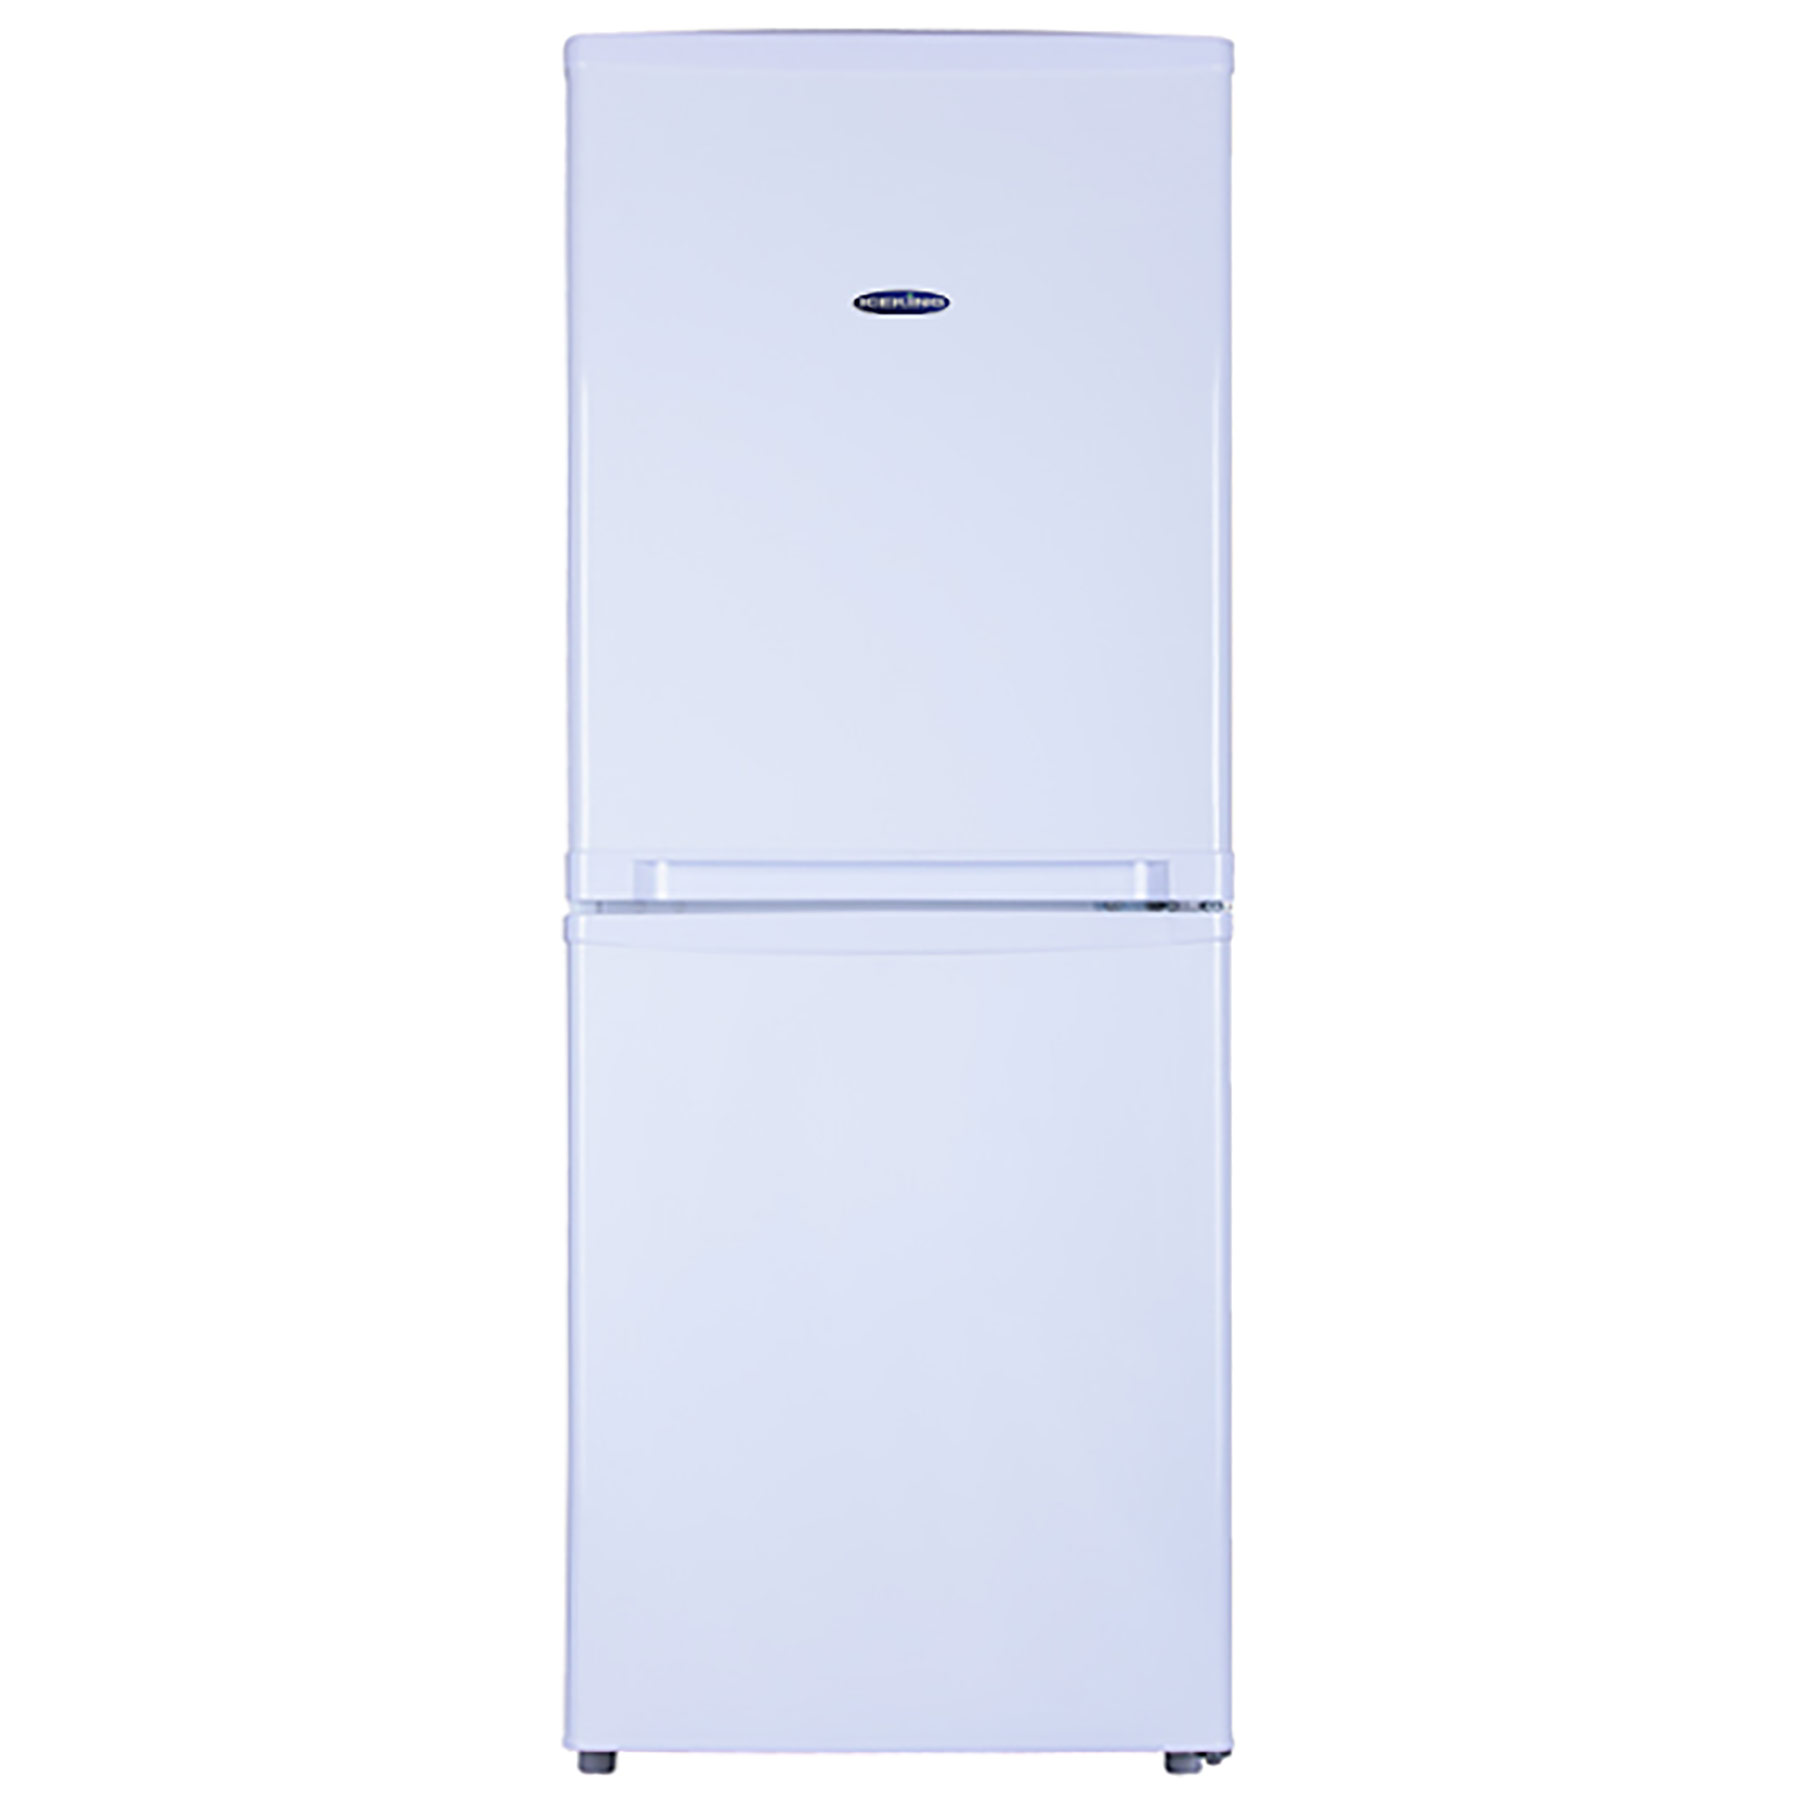 Iceking IK9055EW 50cm Fridge Freezer in White 1 30m E Rated